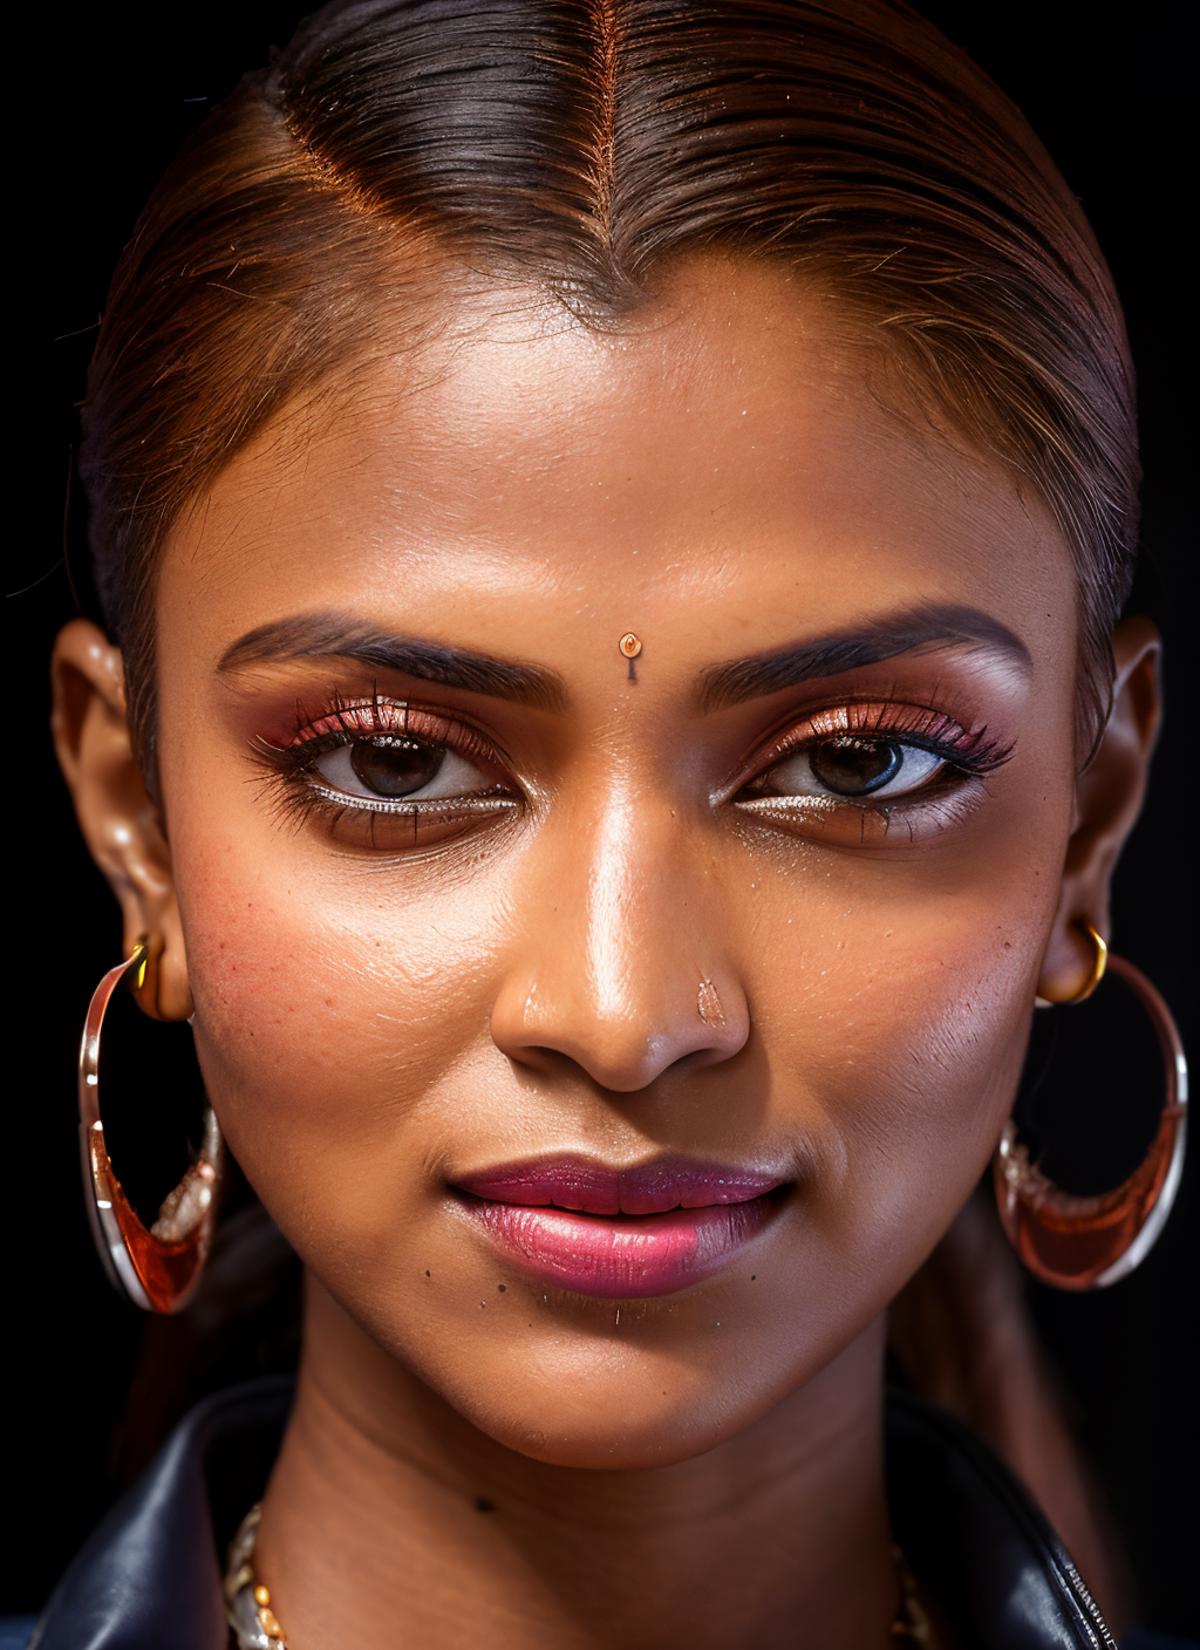 Amala Paul (beautiful indian actress) image by astragartist